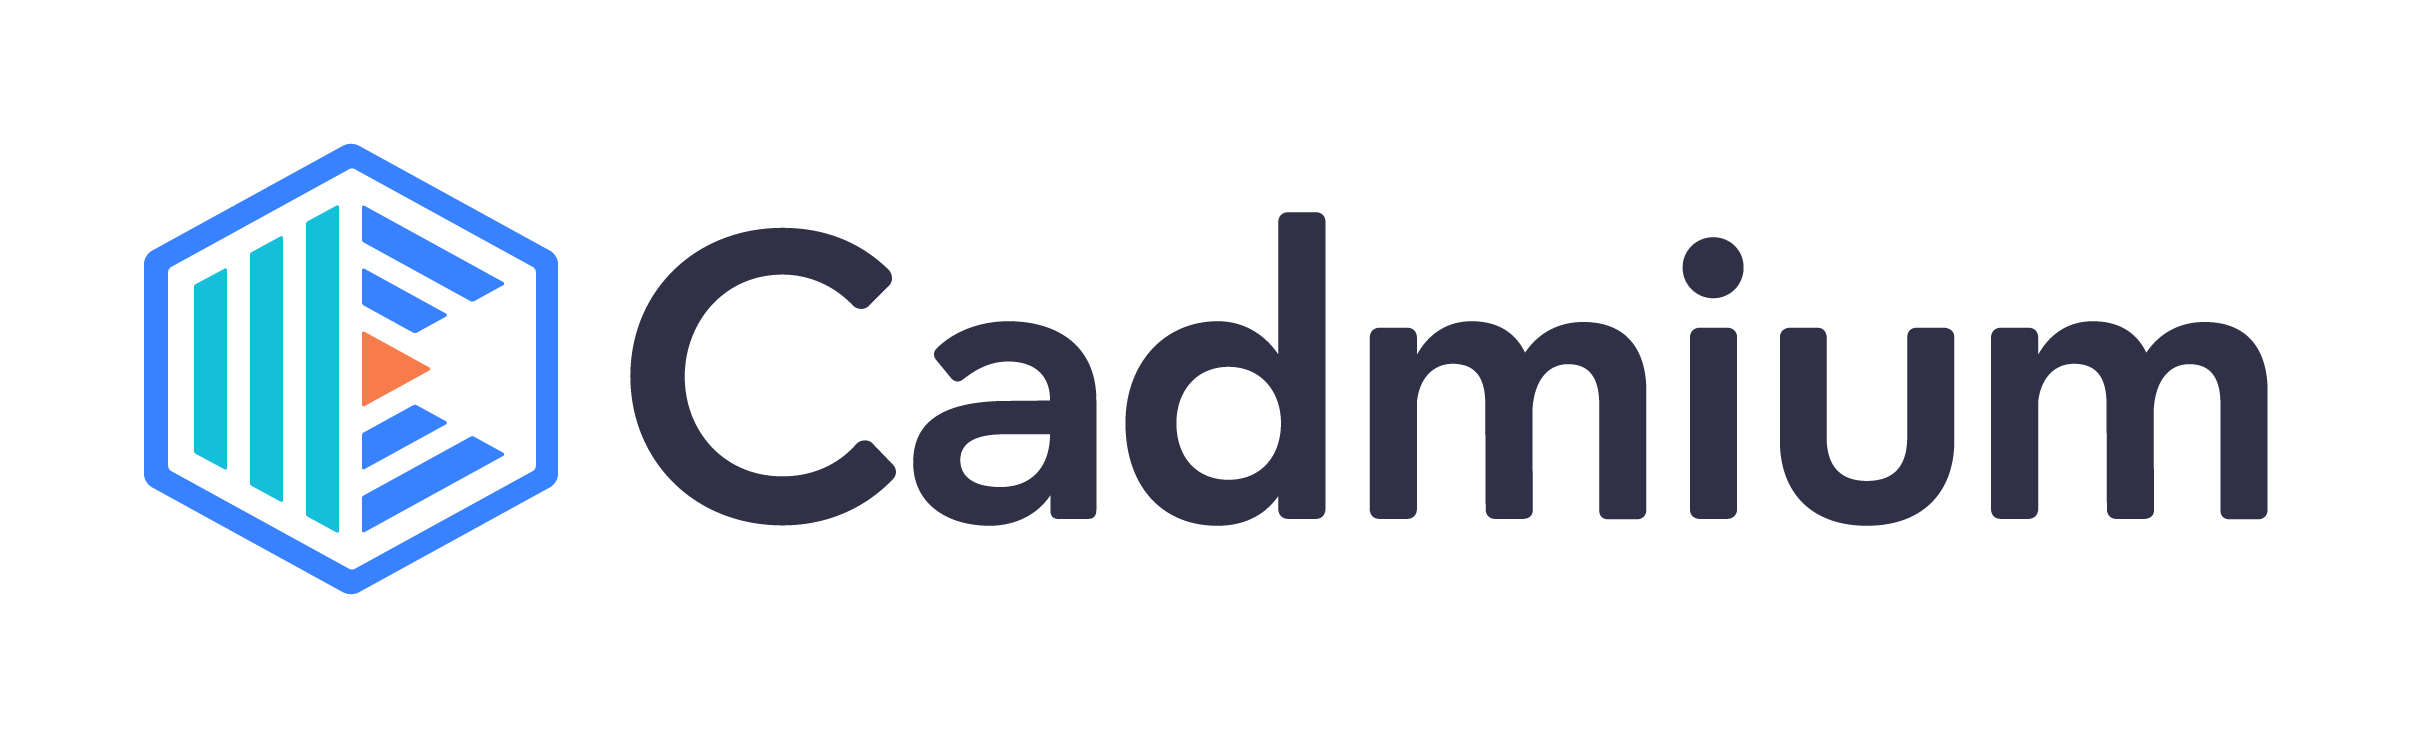 Revolutionizing Registration: Introducing Cadmium’s New Check-in & Badging Solution